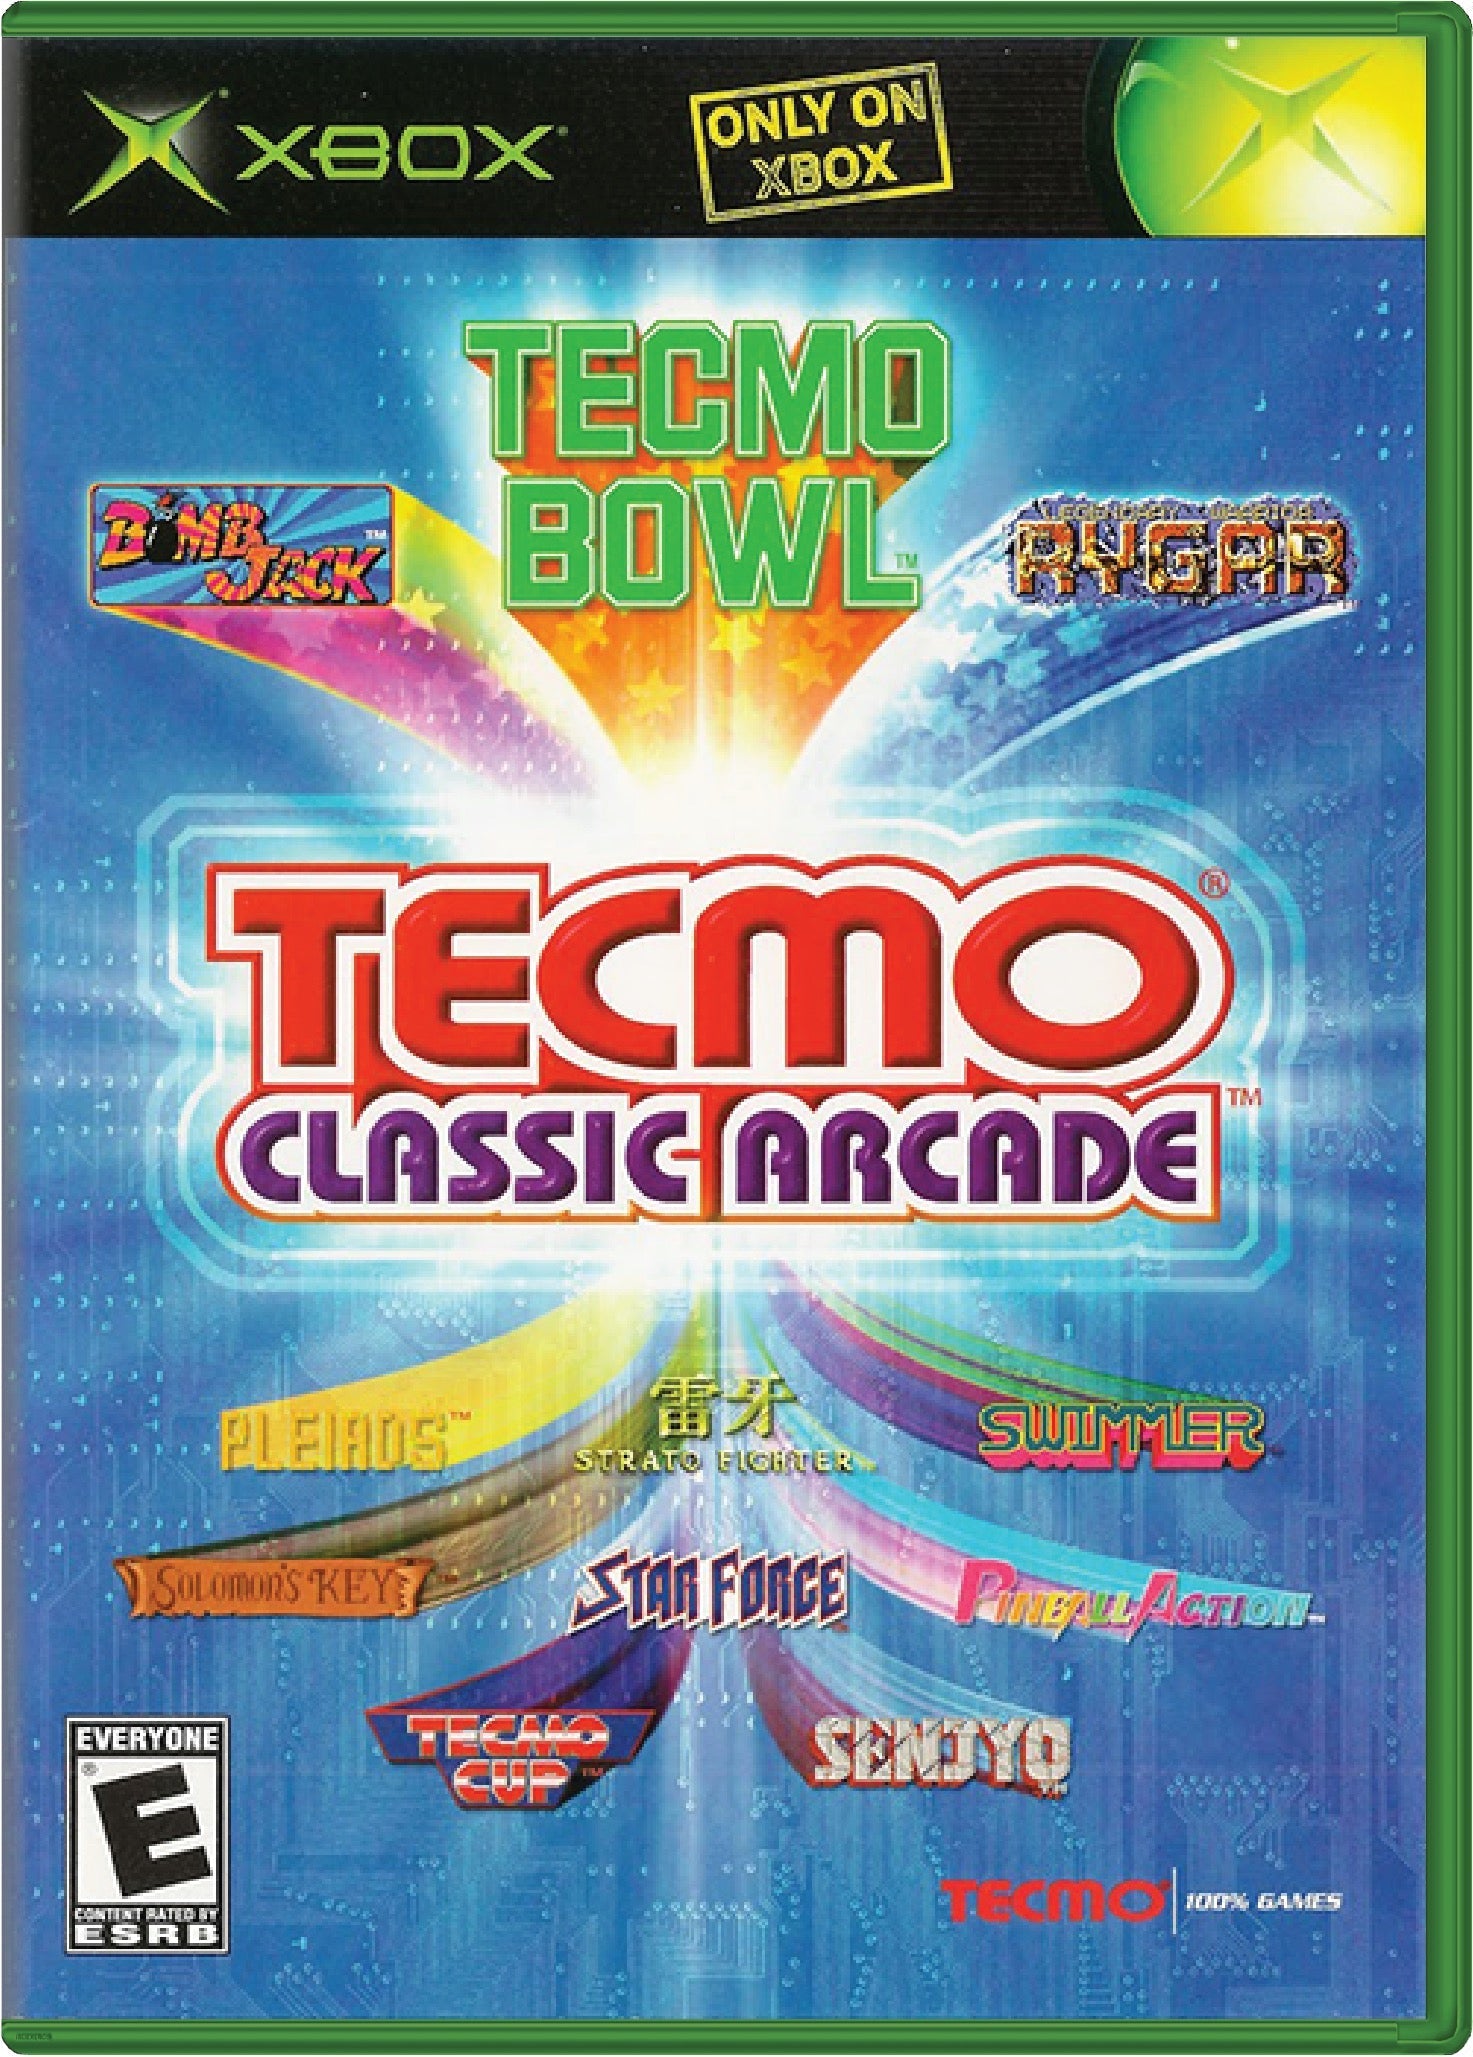 Tecmo Classic Arcade Cover Art